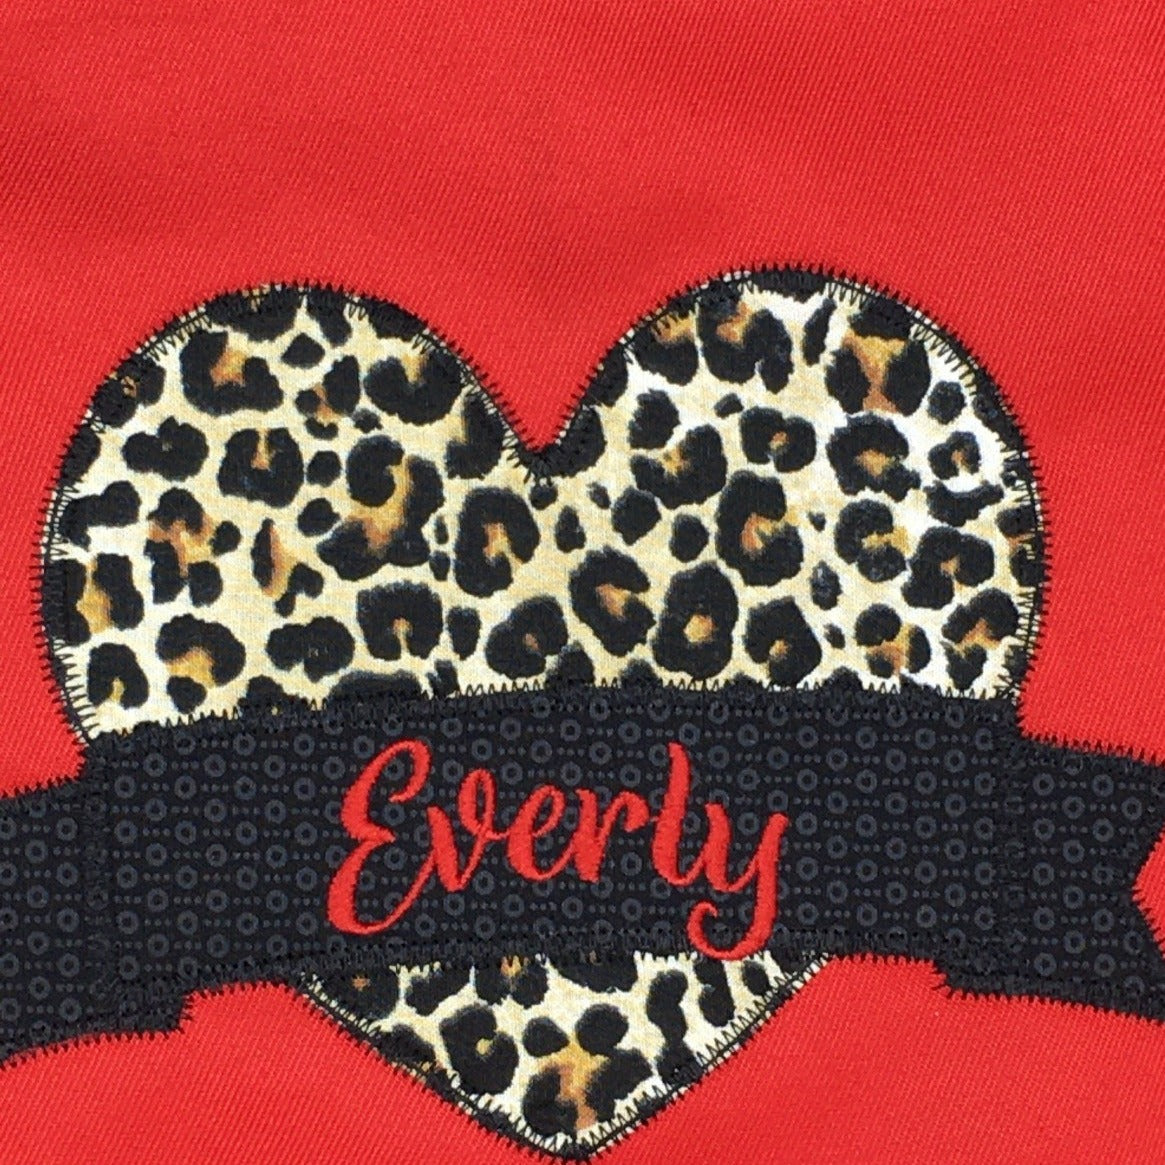 Girls red apron animal print with name closeup